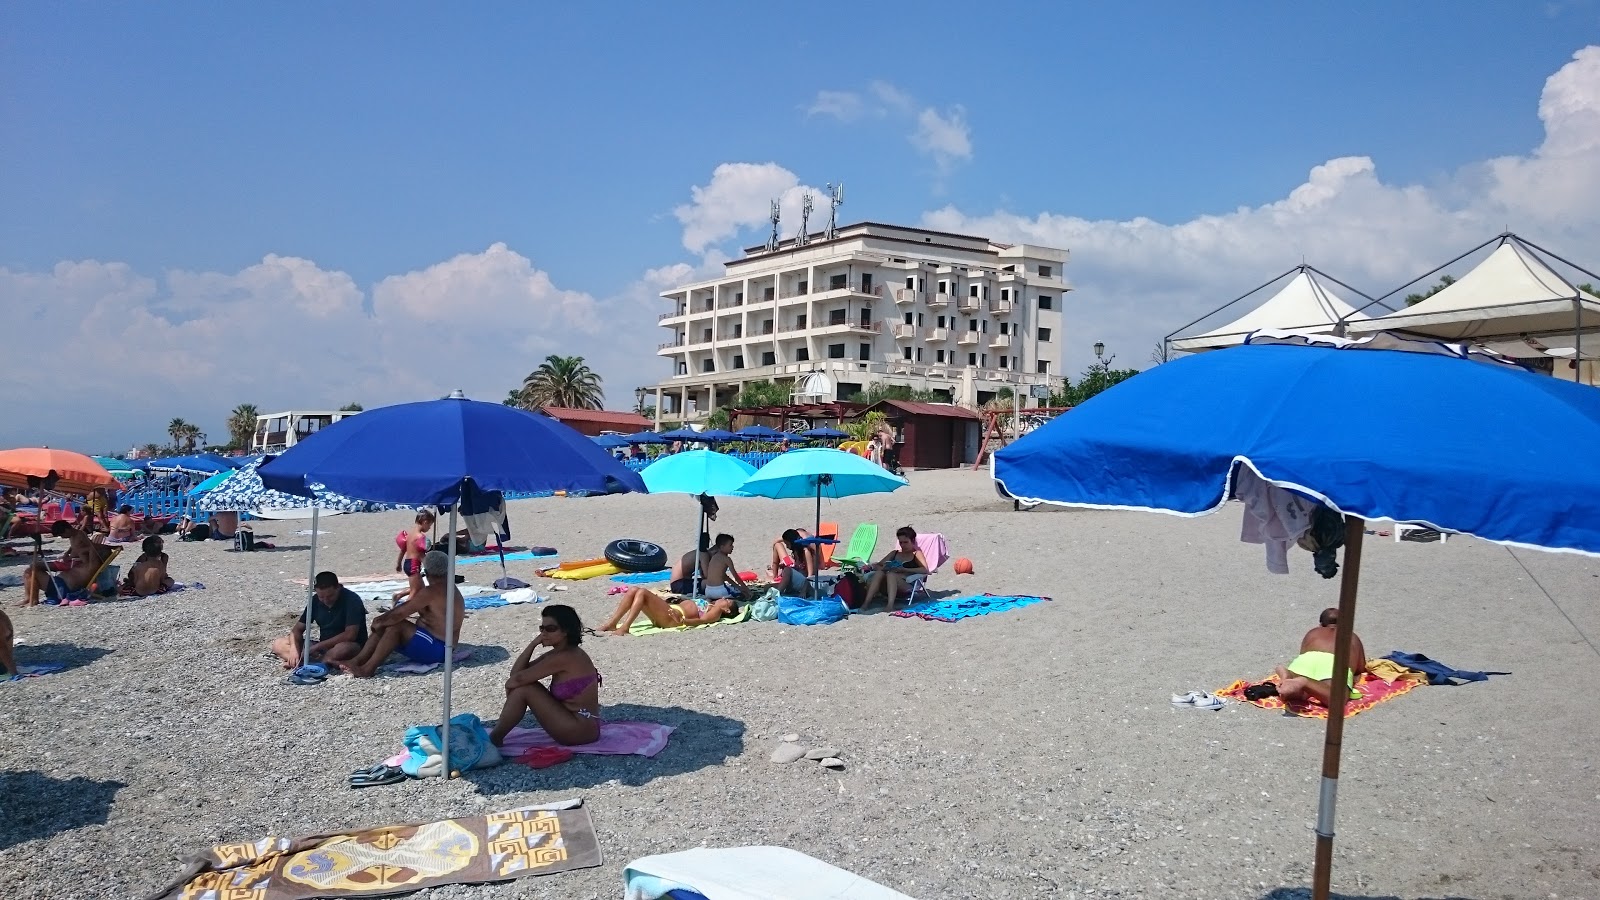 Fotografie cu Siderno beach cu nivelul de curățenie in medie